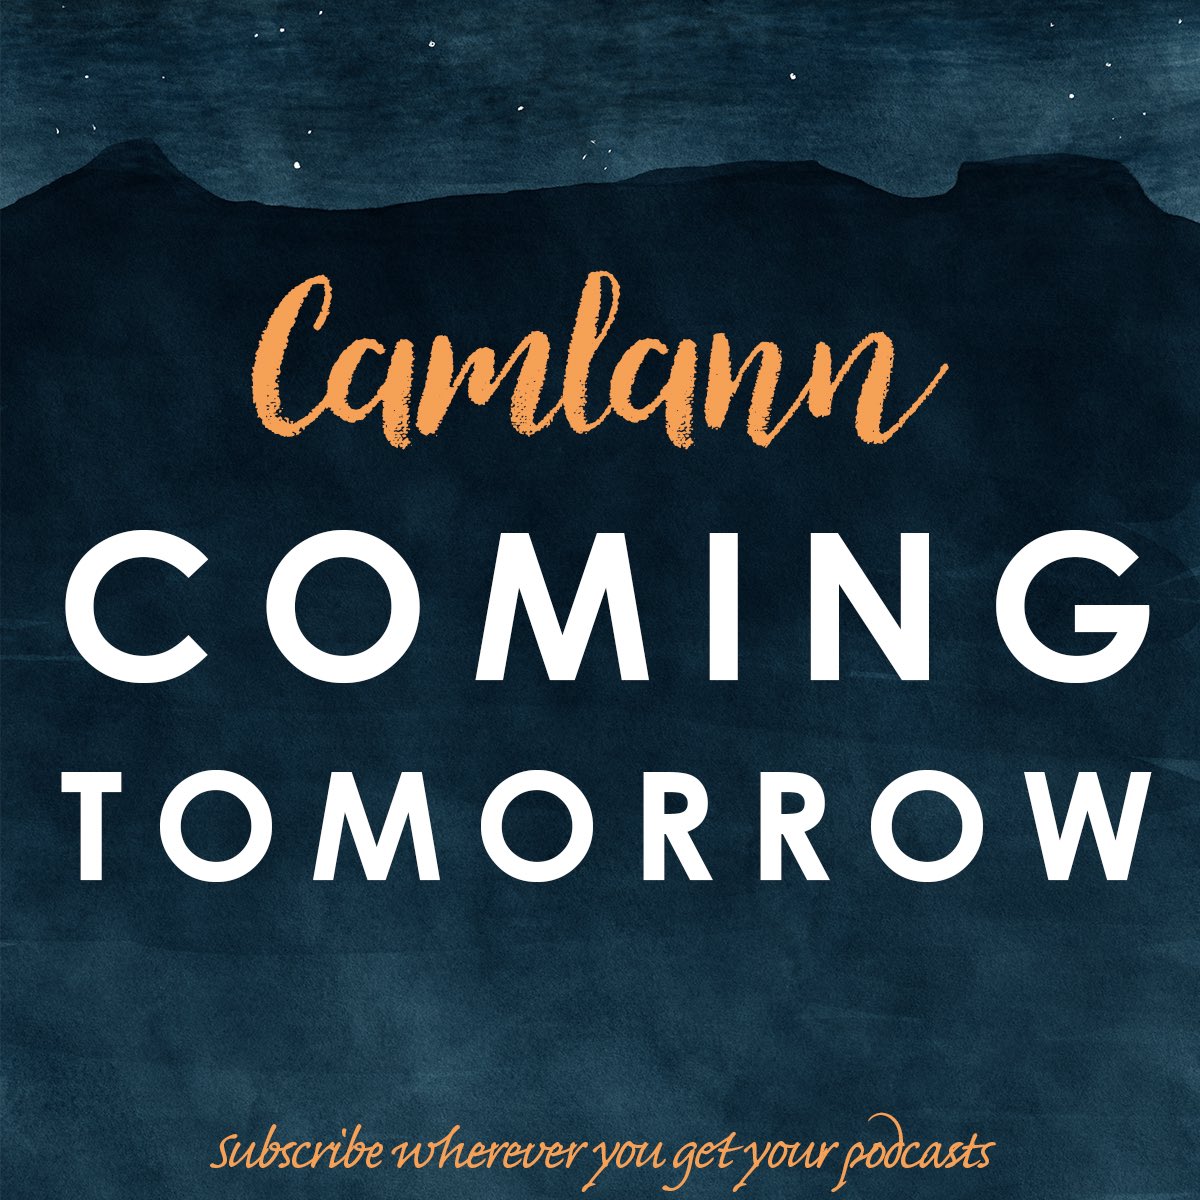 It’s tomorrow… #Camlann